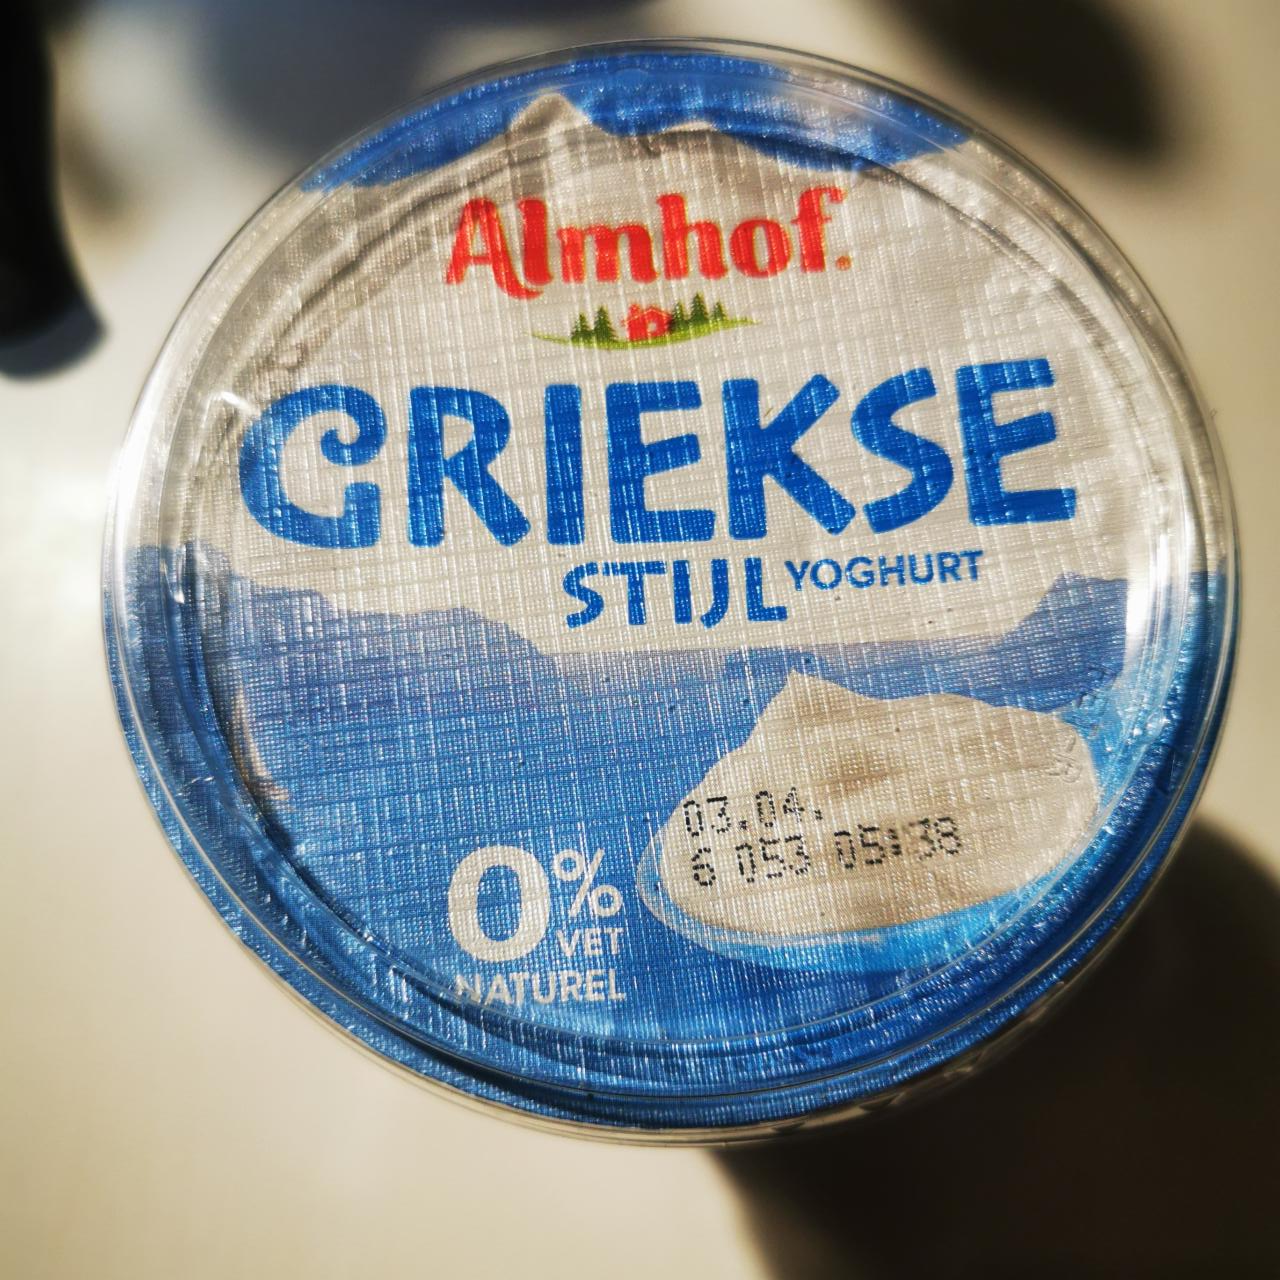 Fotografie - Griekse Stijl Yoghurt 0% vet Almhof